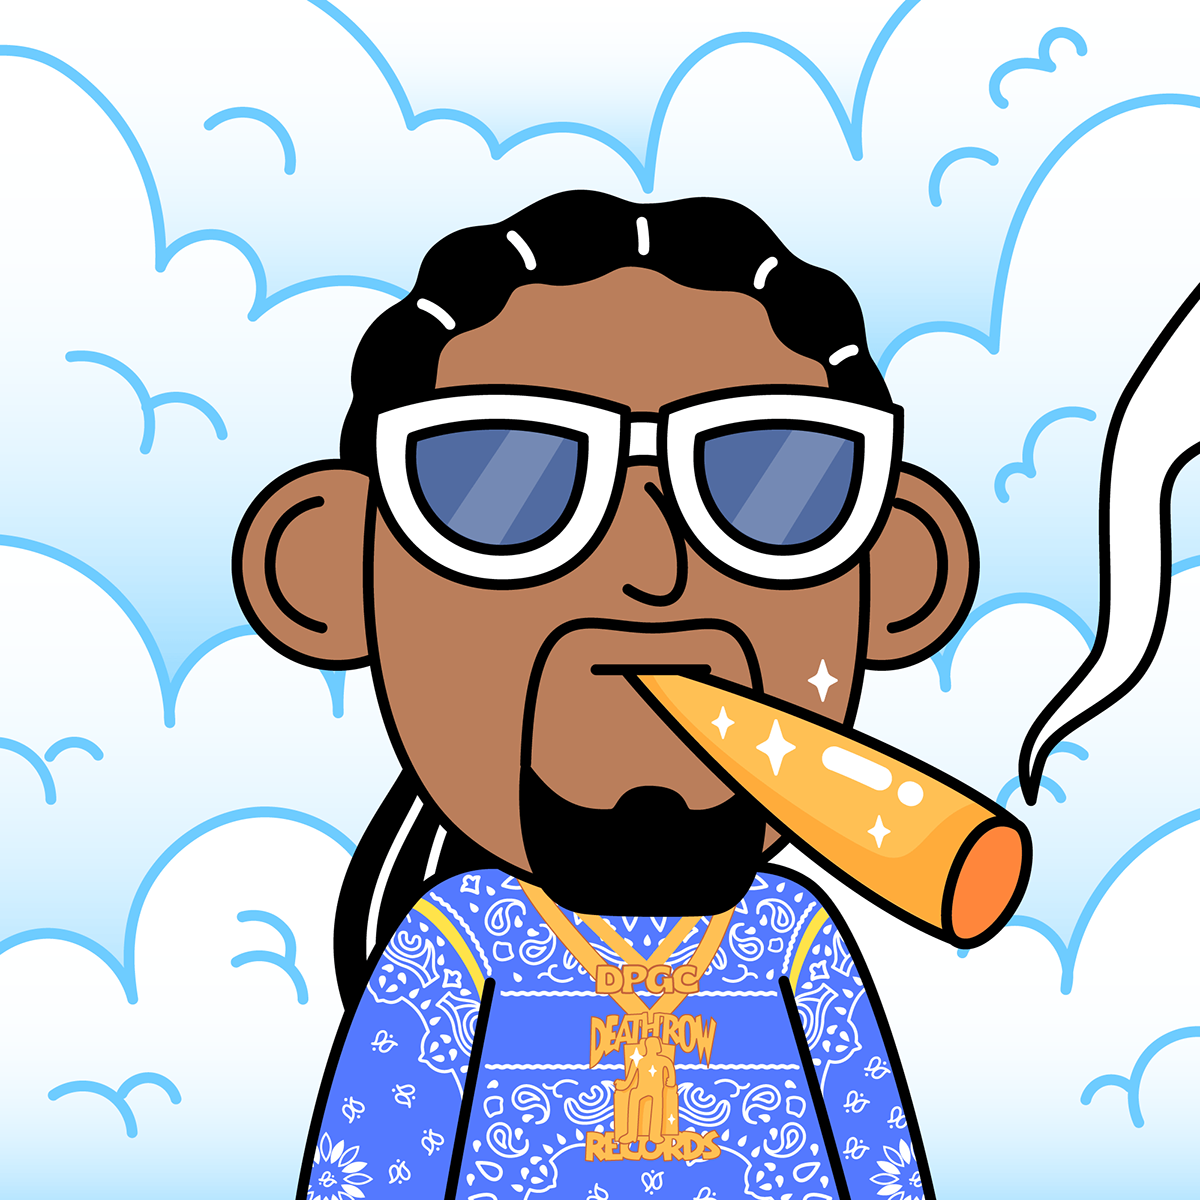 Snoop Dogg x Dippies on Behance